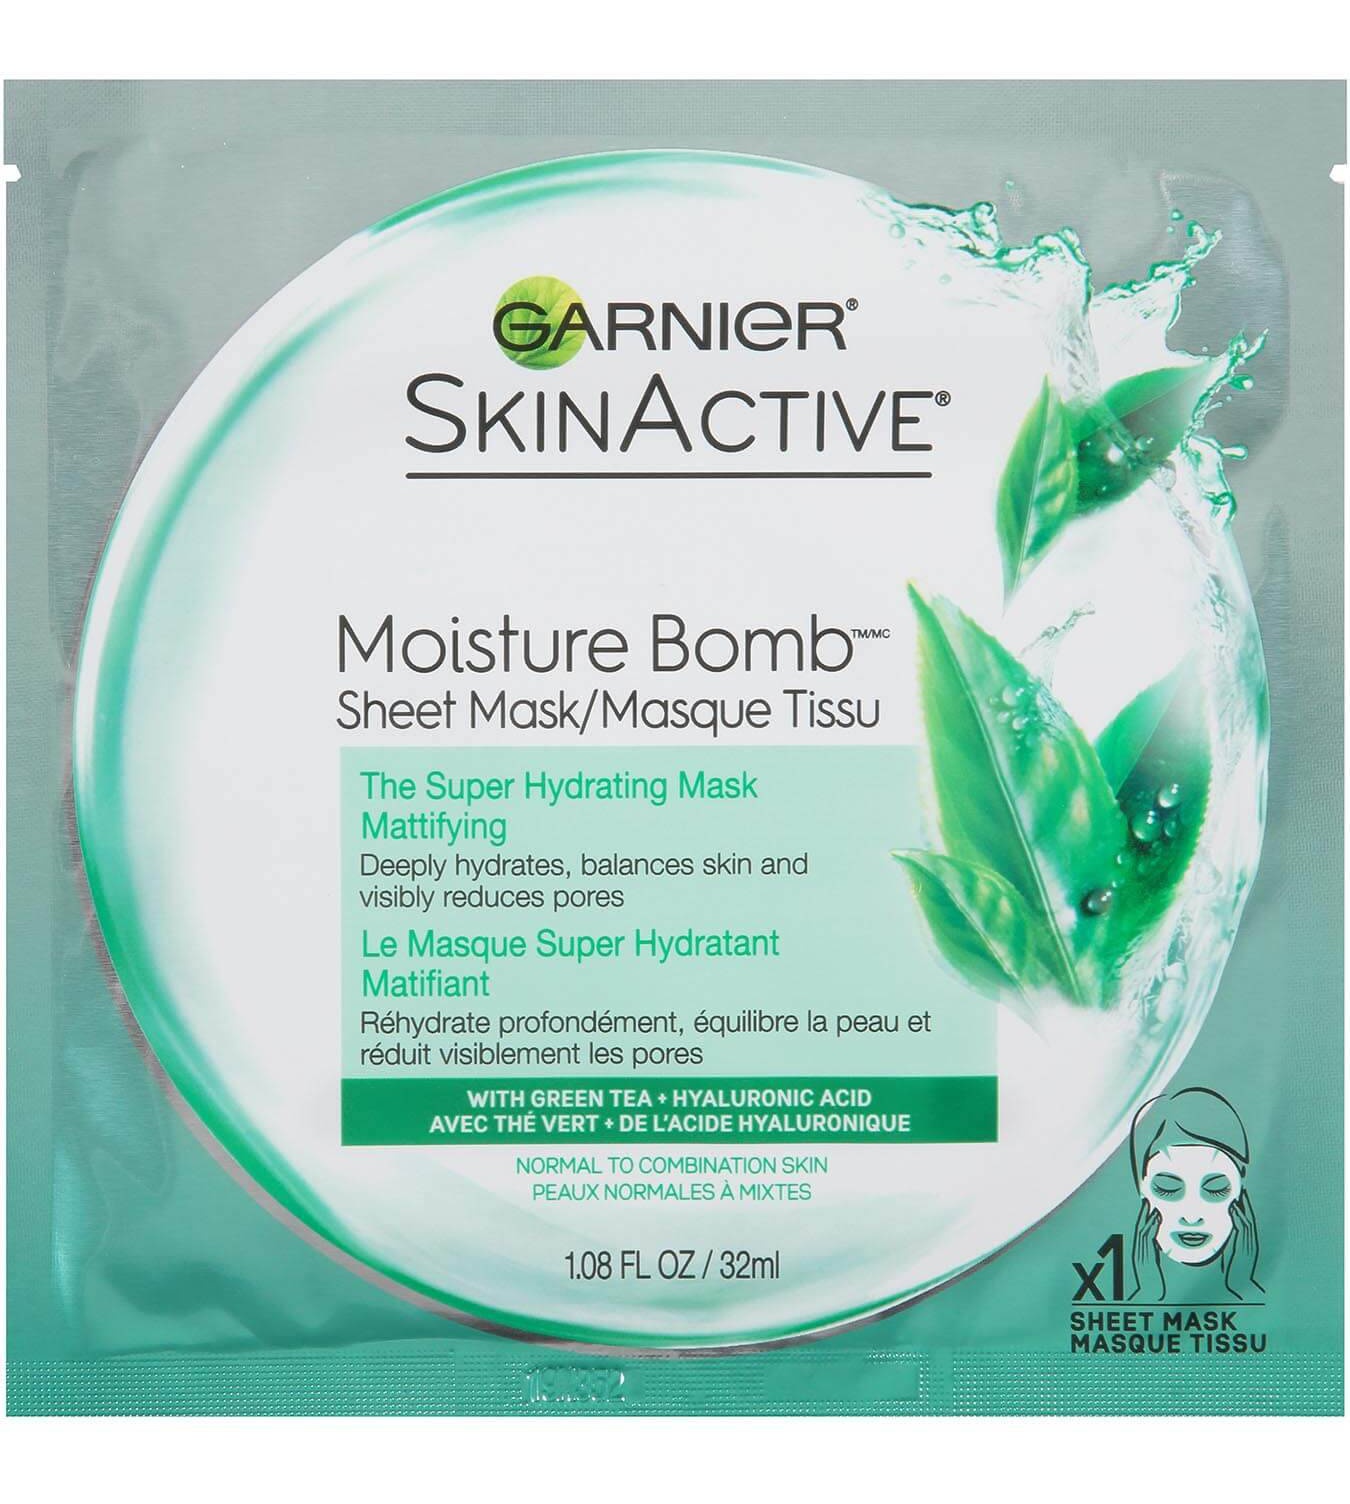 Garnier SkinActive
The Super Hydrating Sheet Mask-Mattifying